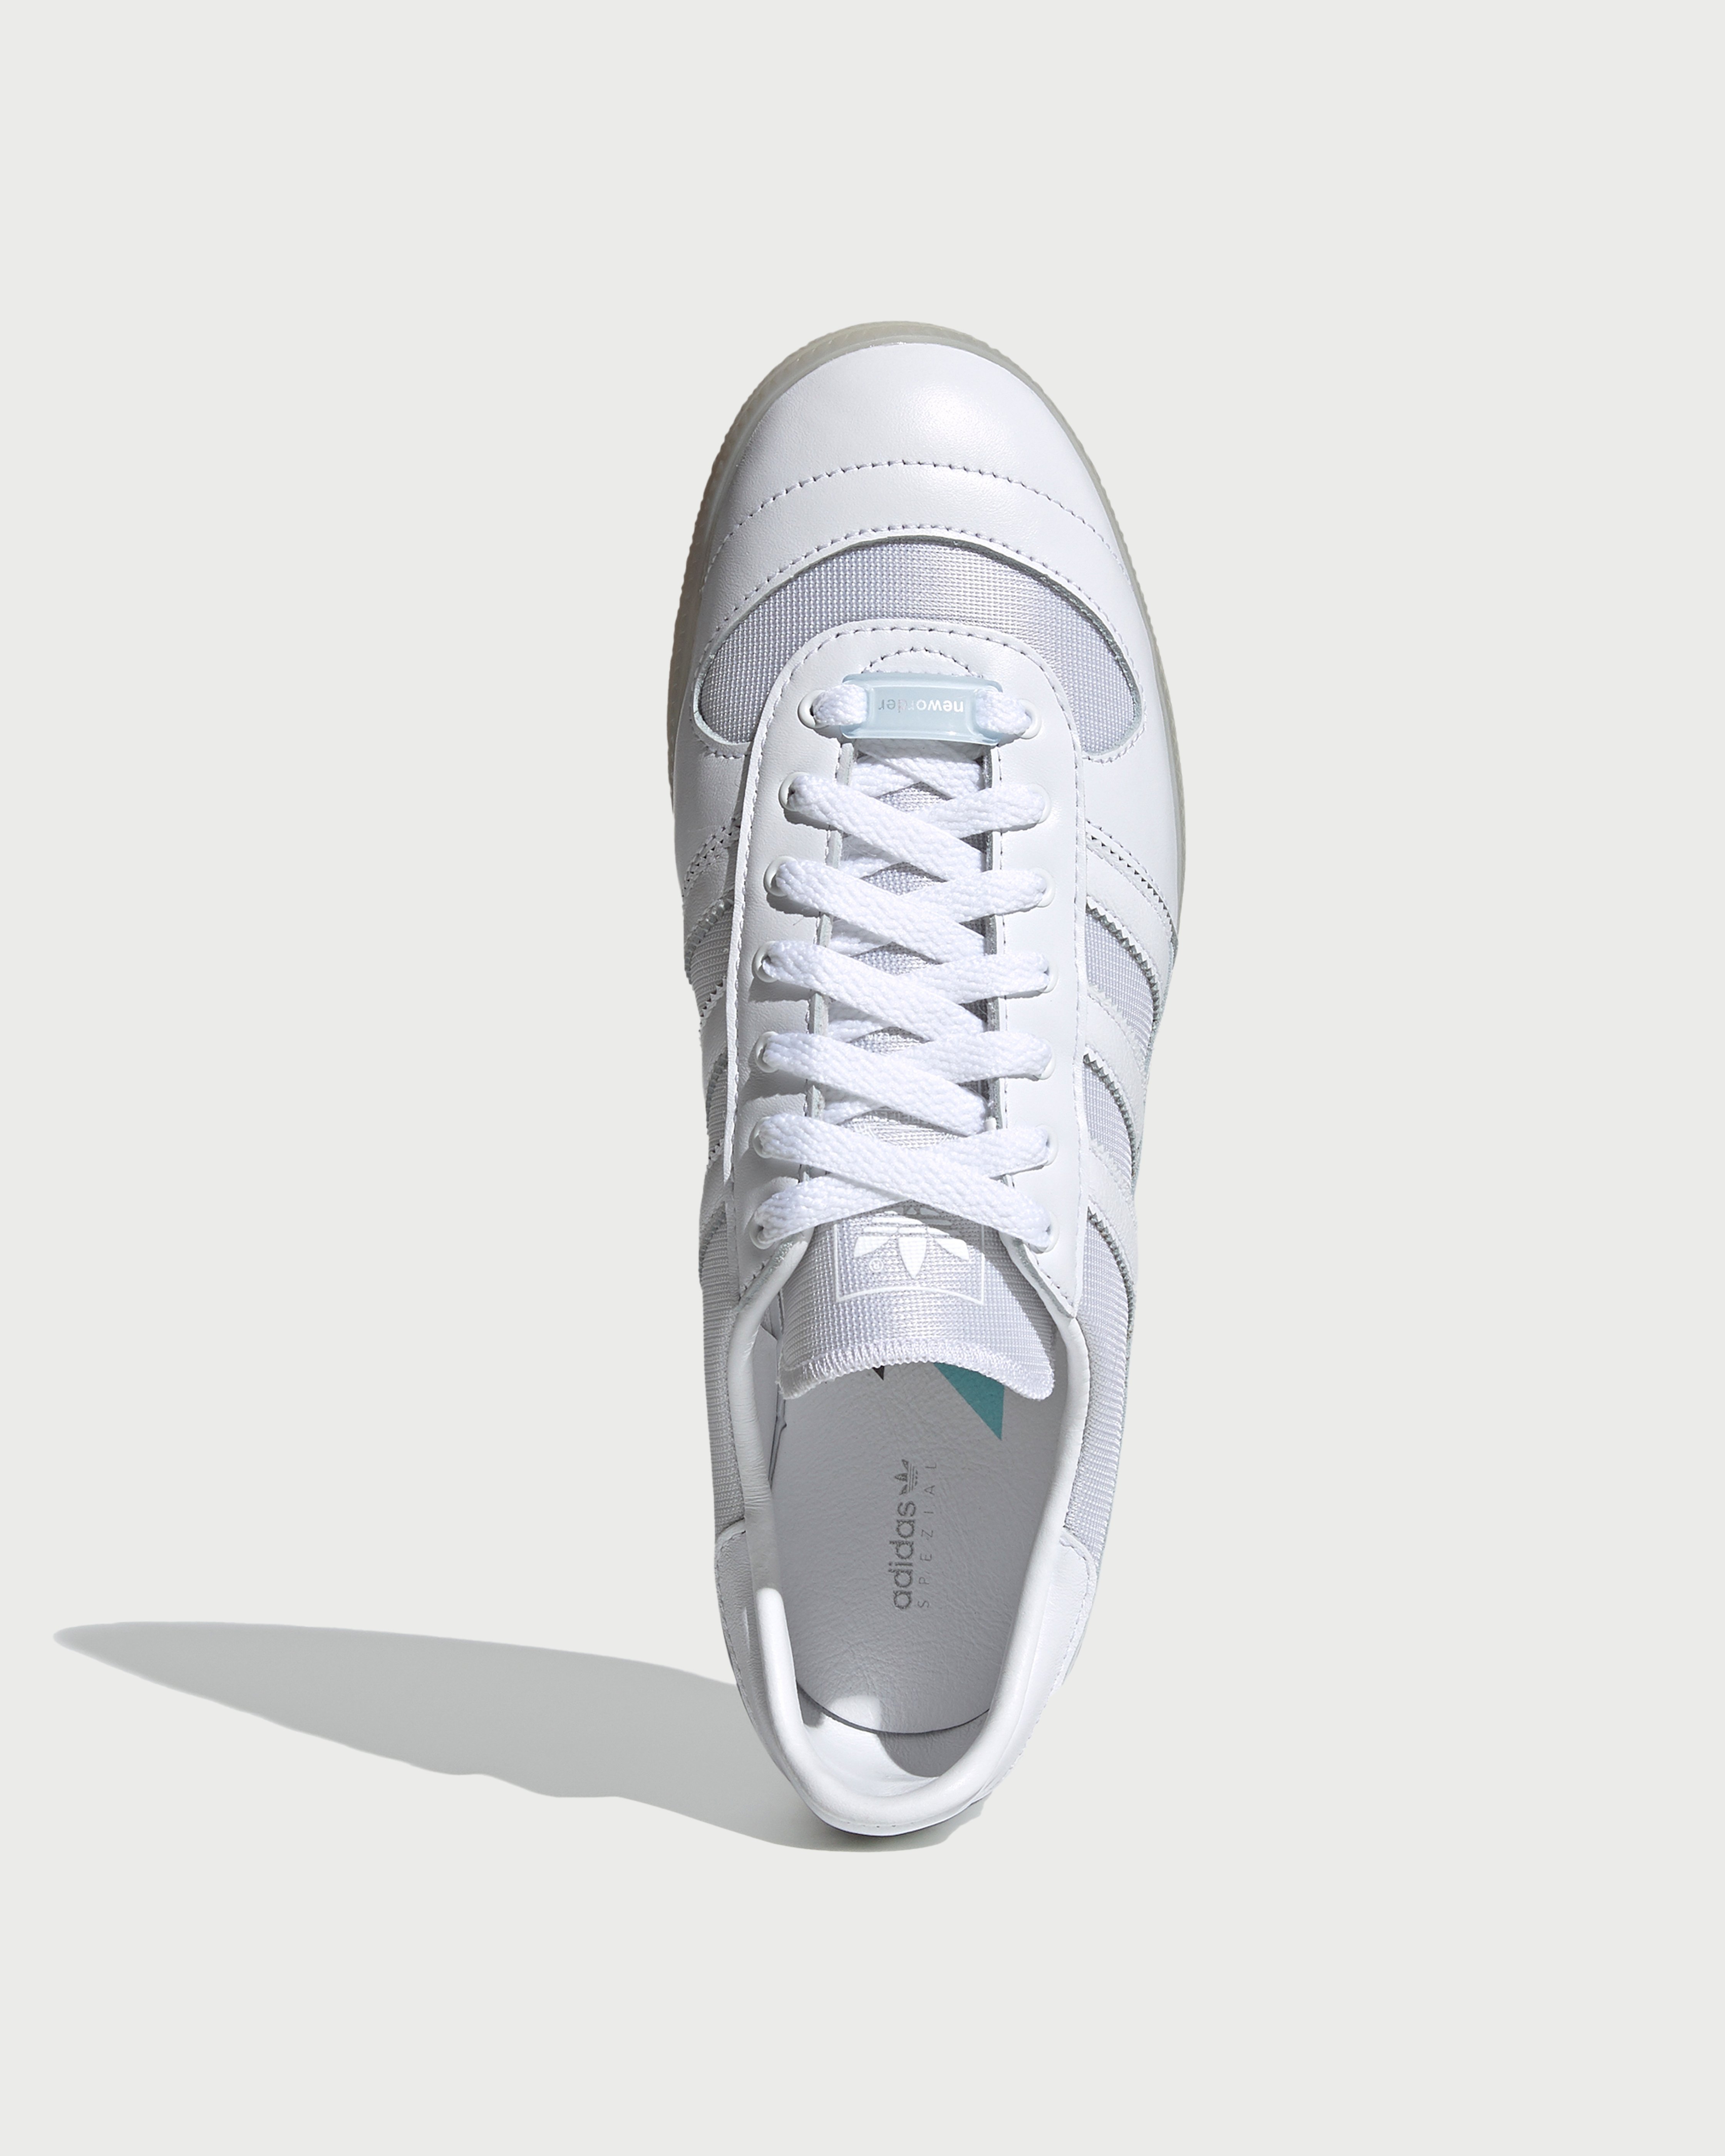 Adidas - Wilsy Spezial x New Order White - Footwear - White - Image 3